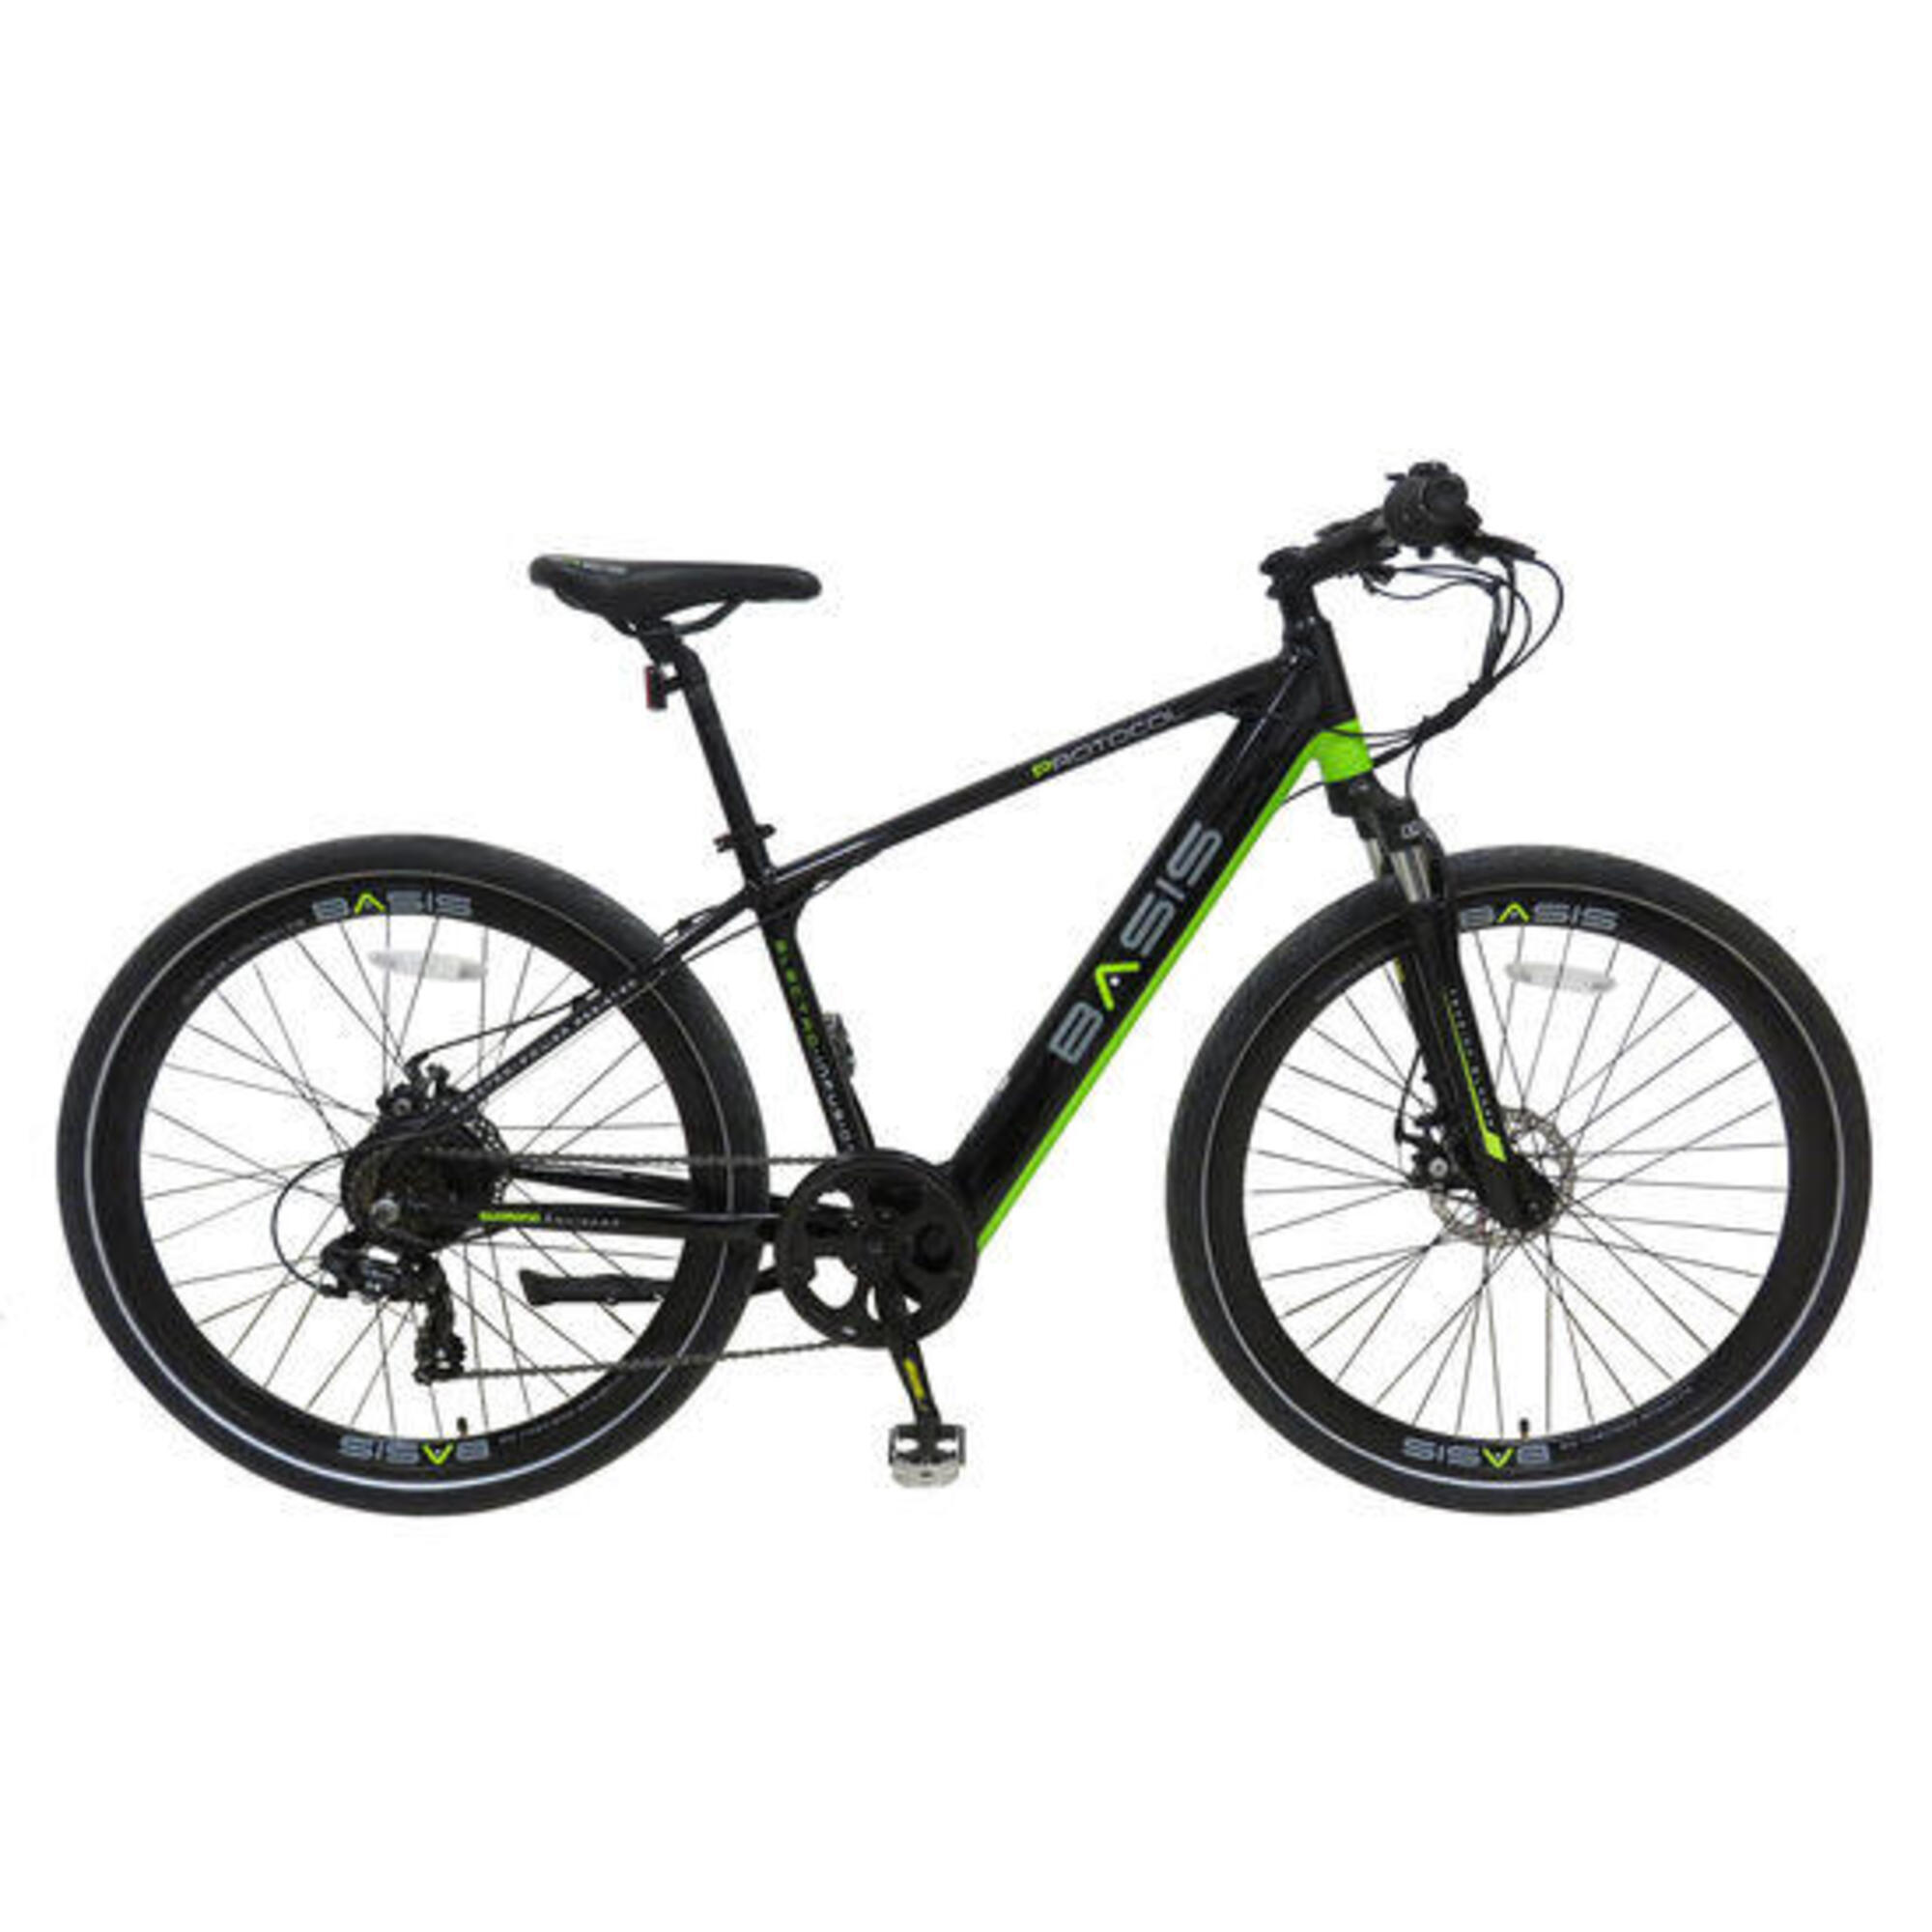 BASIS Basis Protocol Hybrid Electric Bike, 7Ah, 700c Wheel - Black/Green